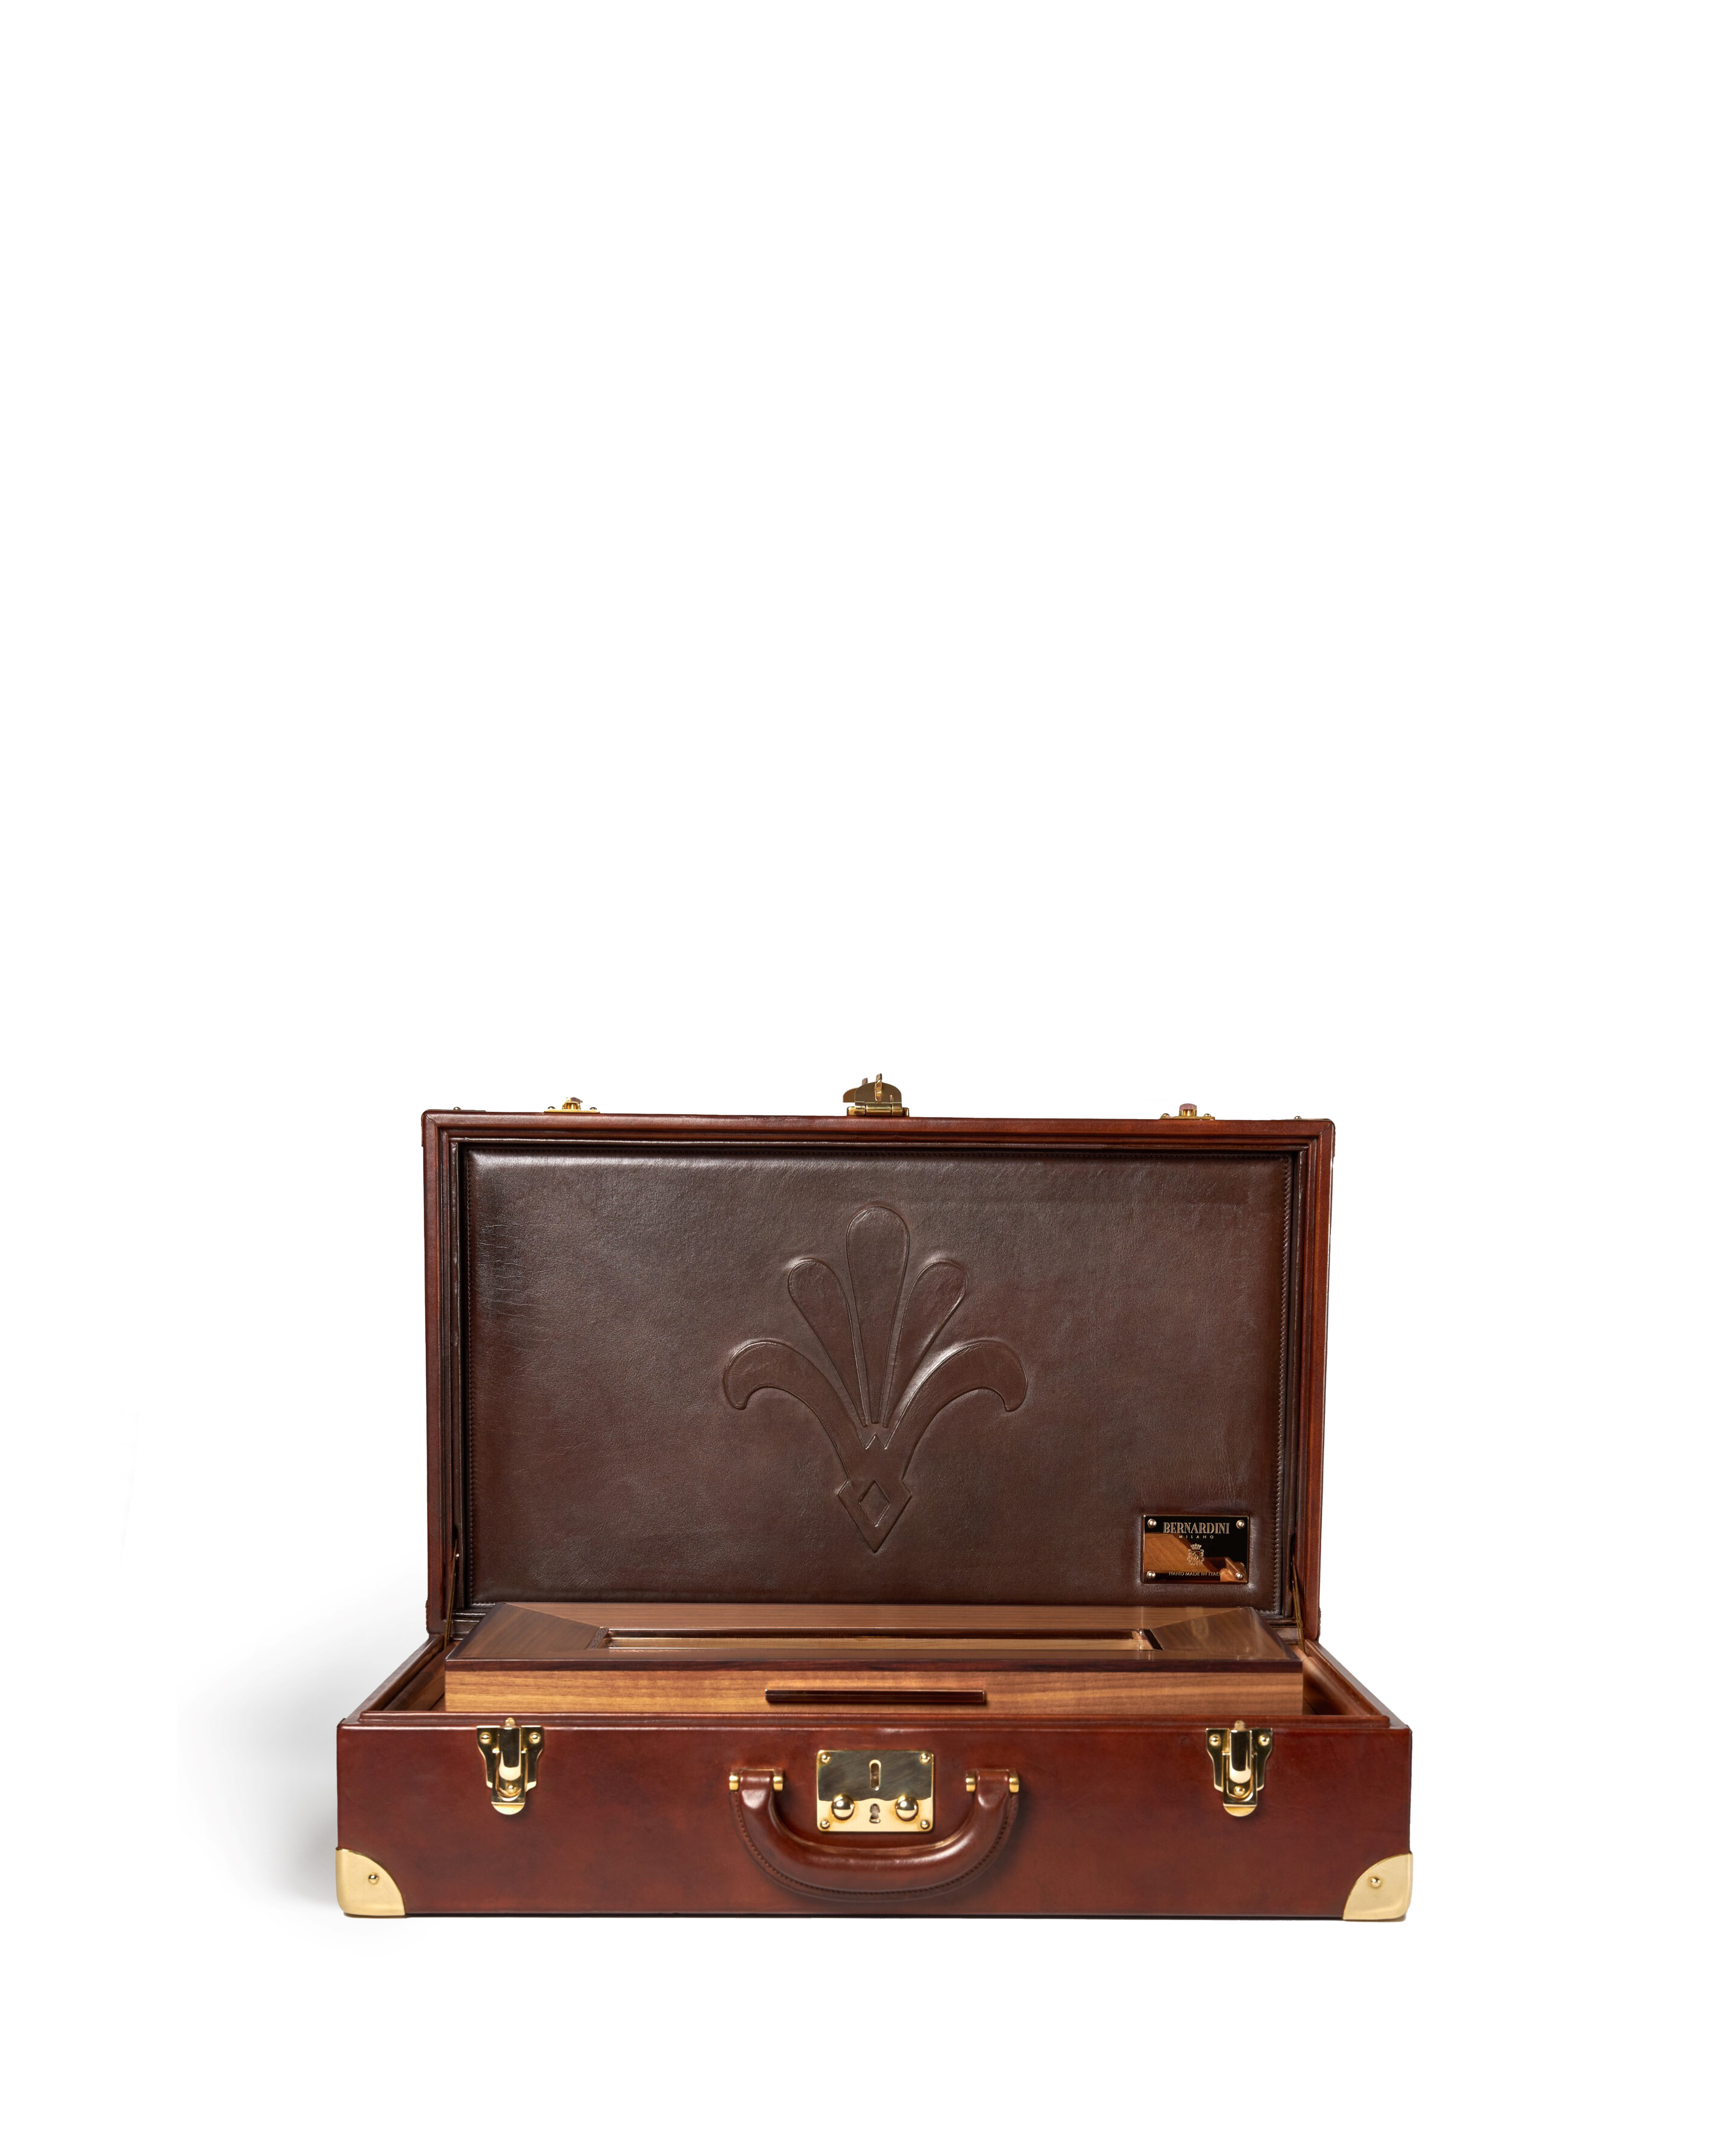 Bernardini Humidor Briefcase - French Lily and Walnut